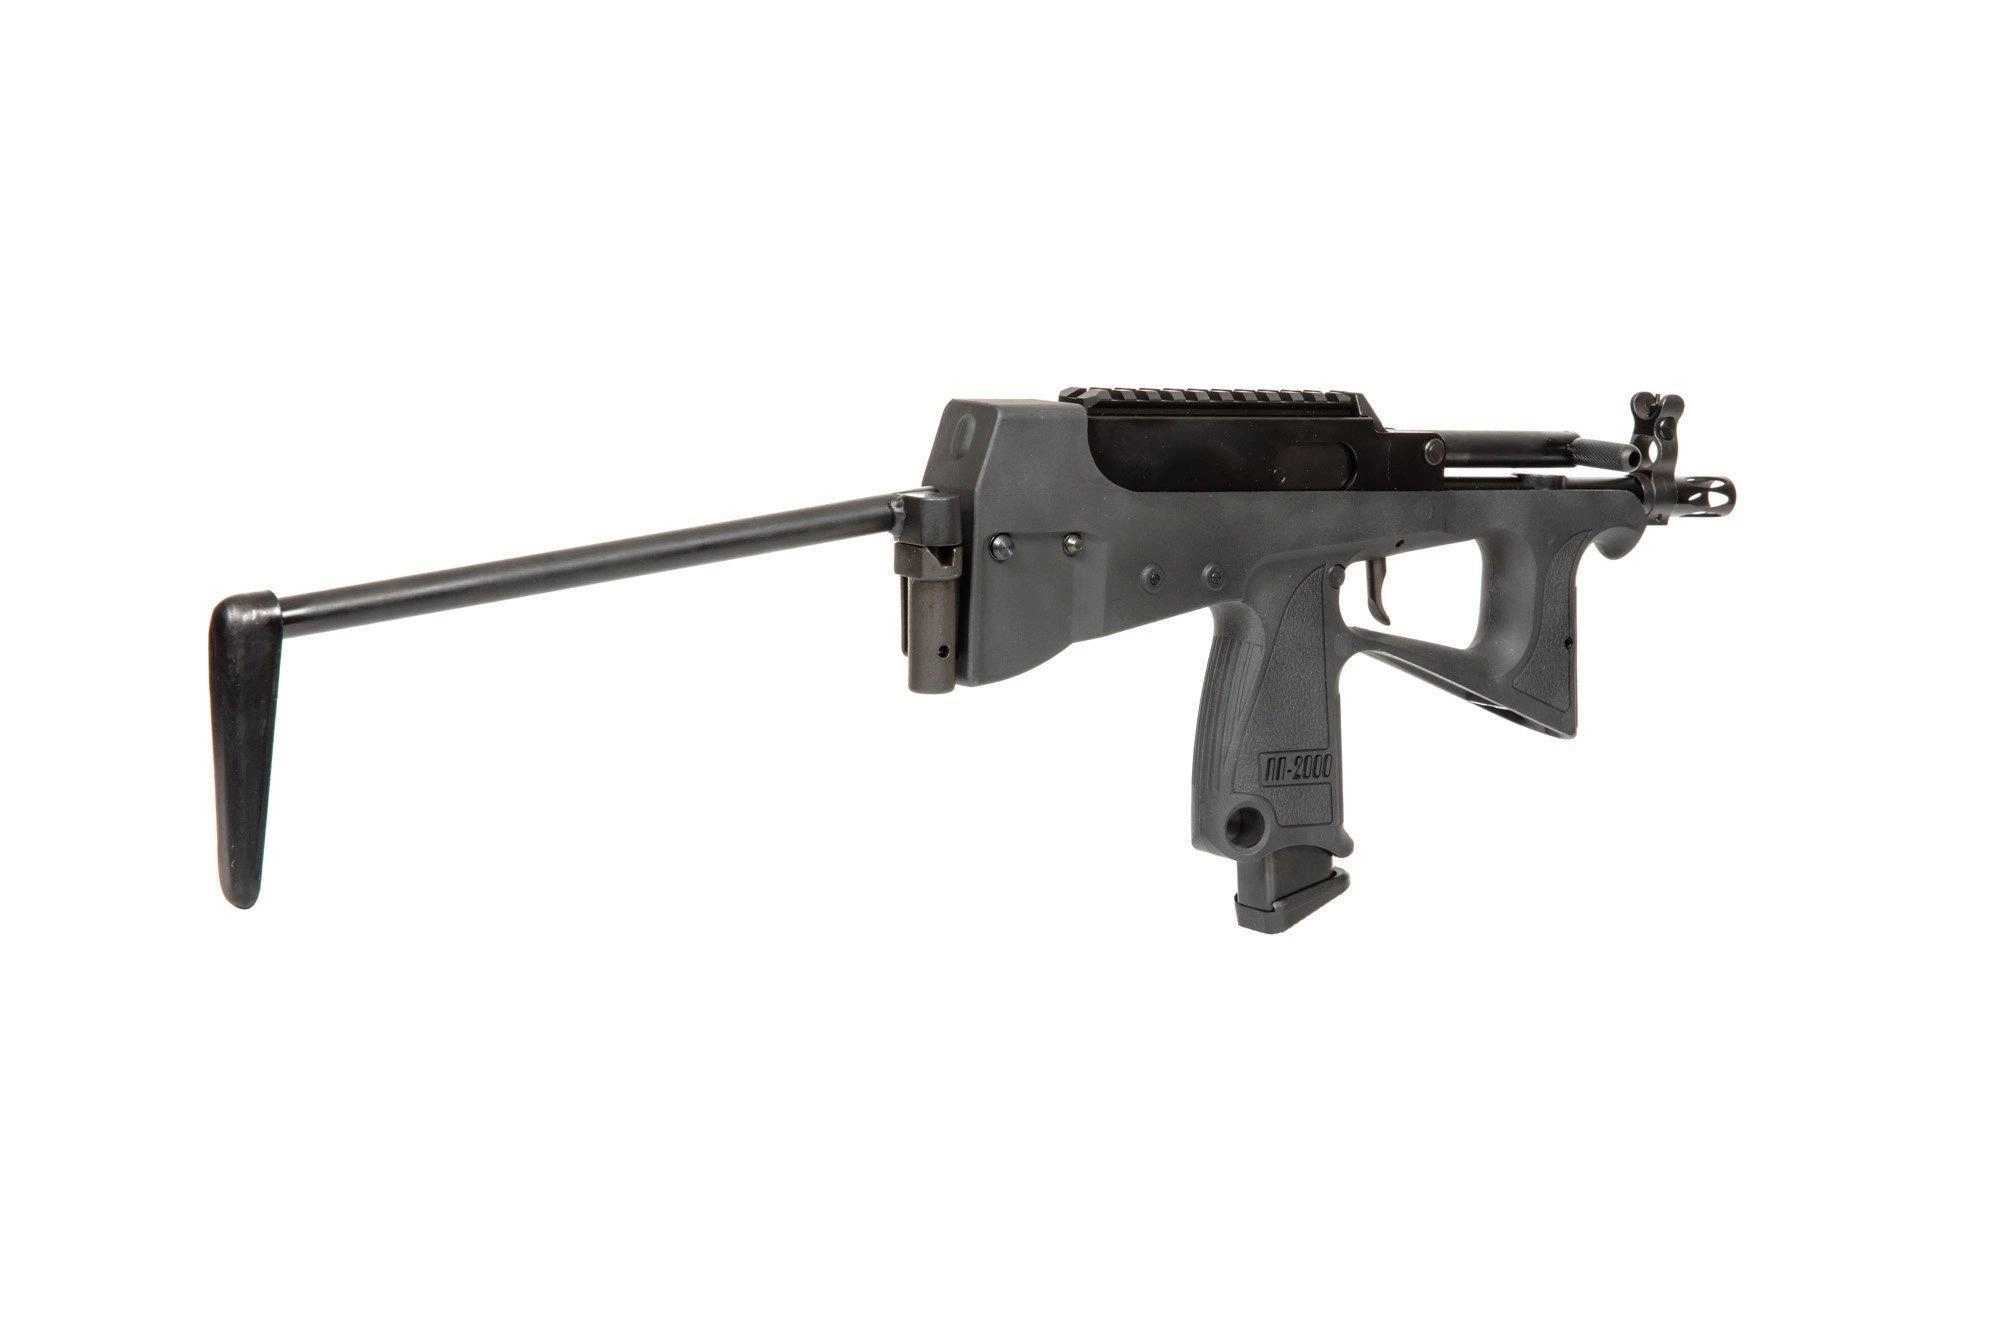 Modify PP-2K PP-2000 GBB konepistooli